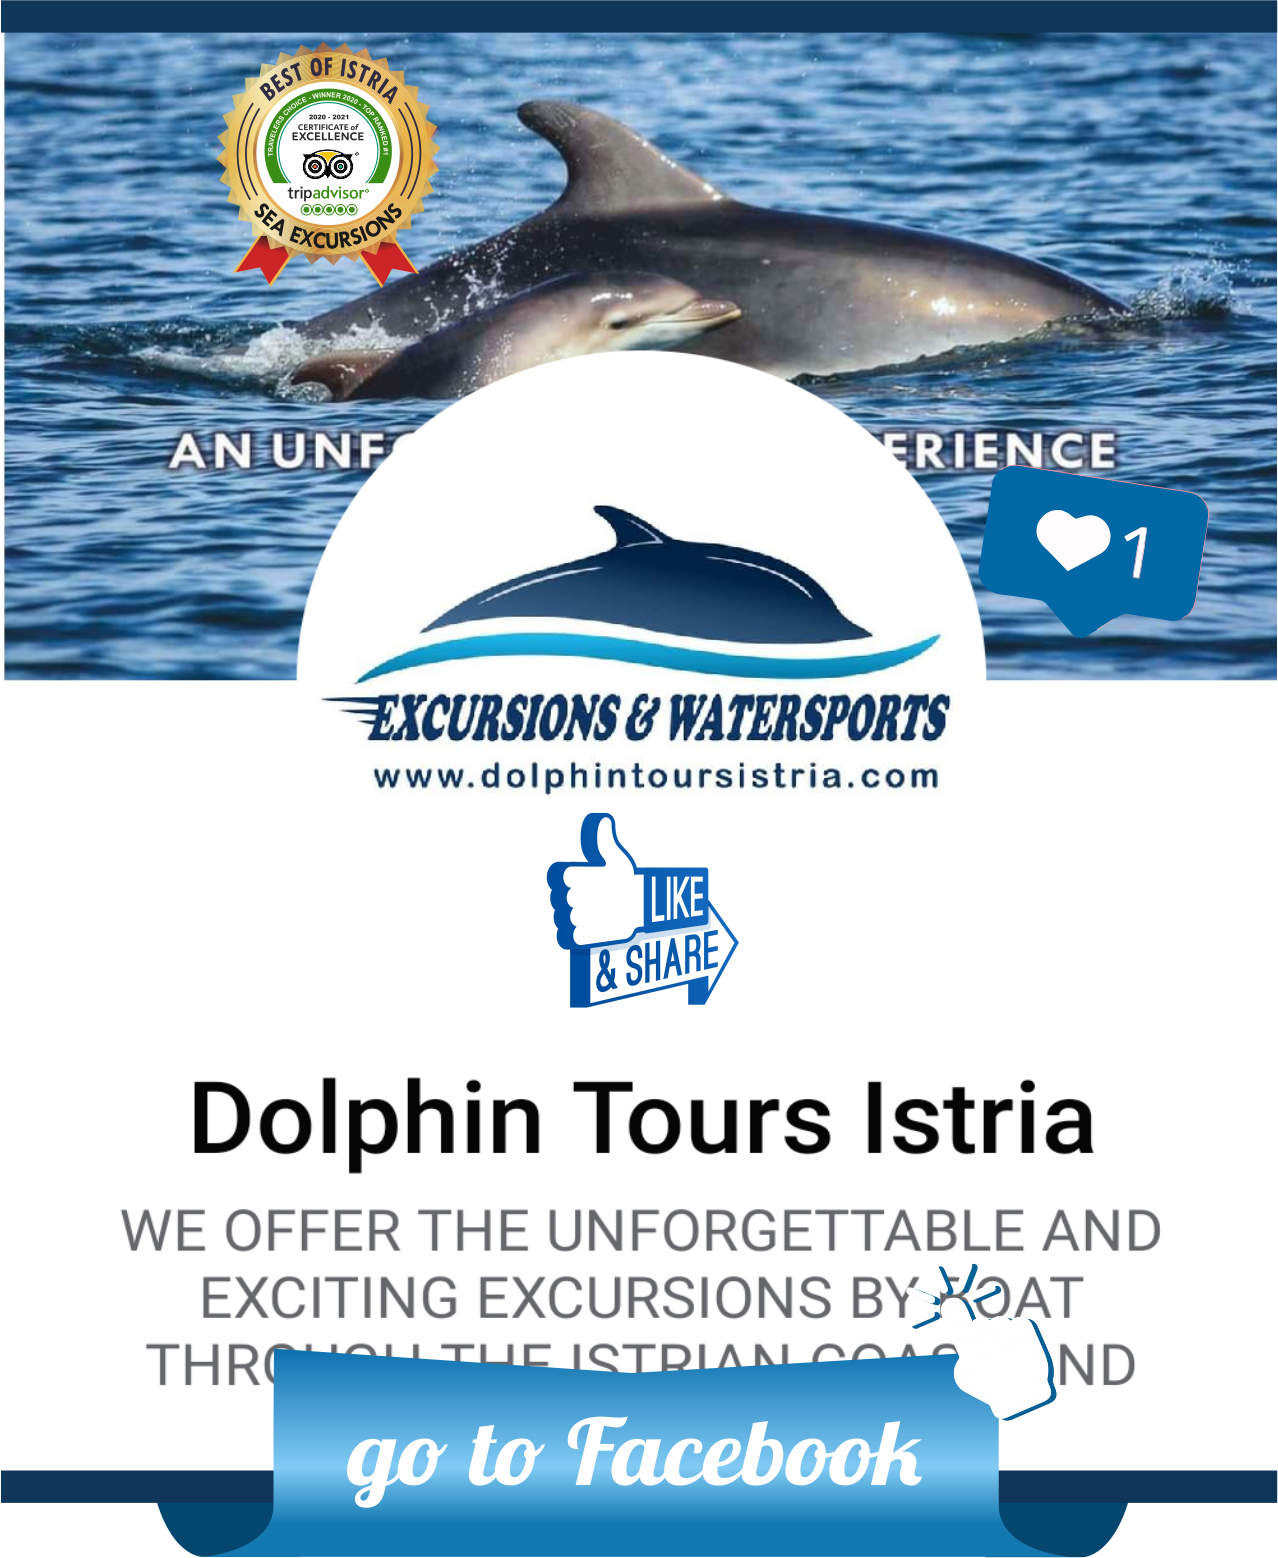 Dolphin tours Istria on Facebook